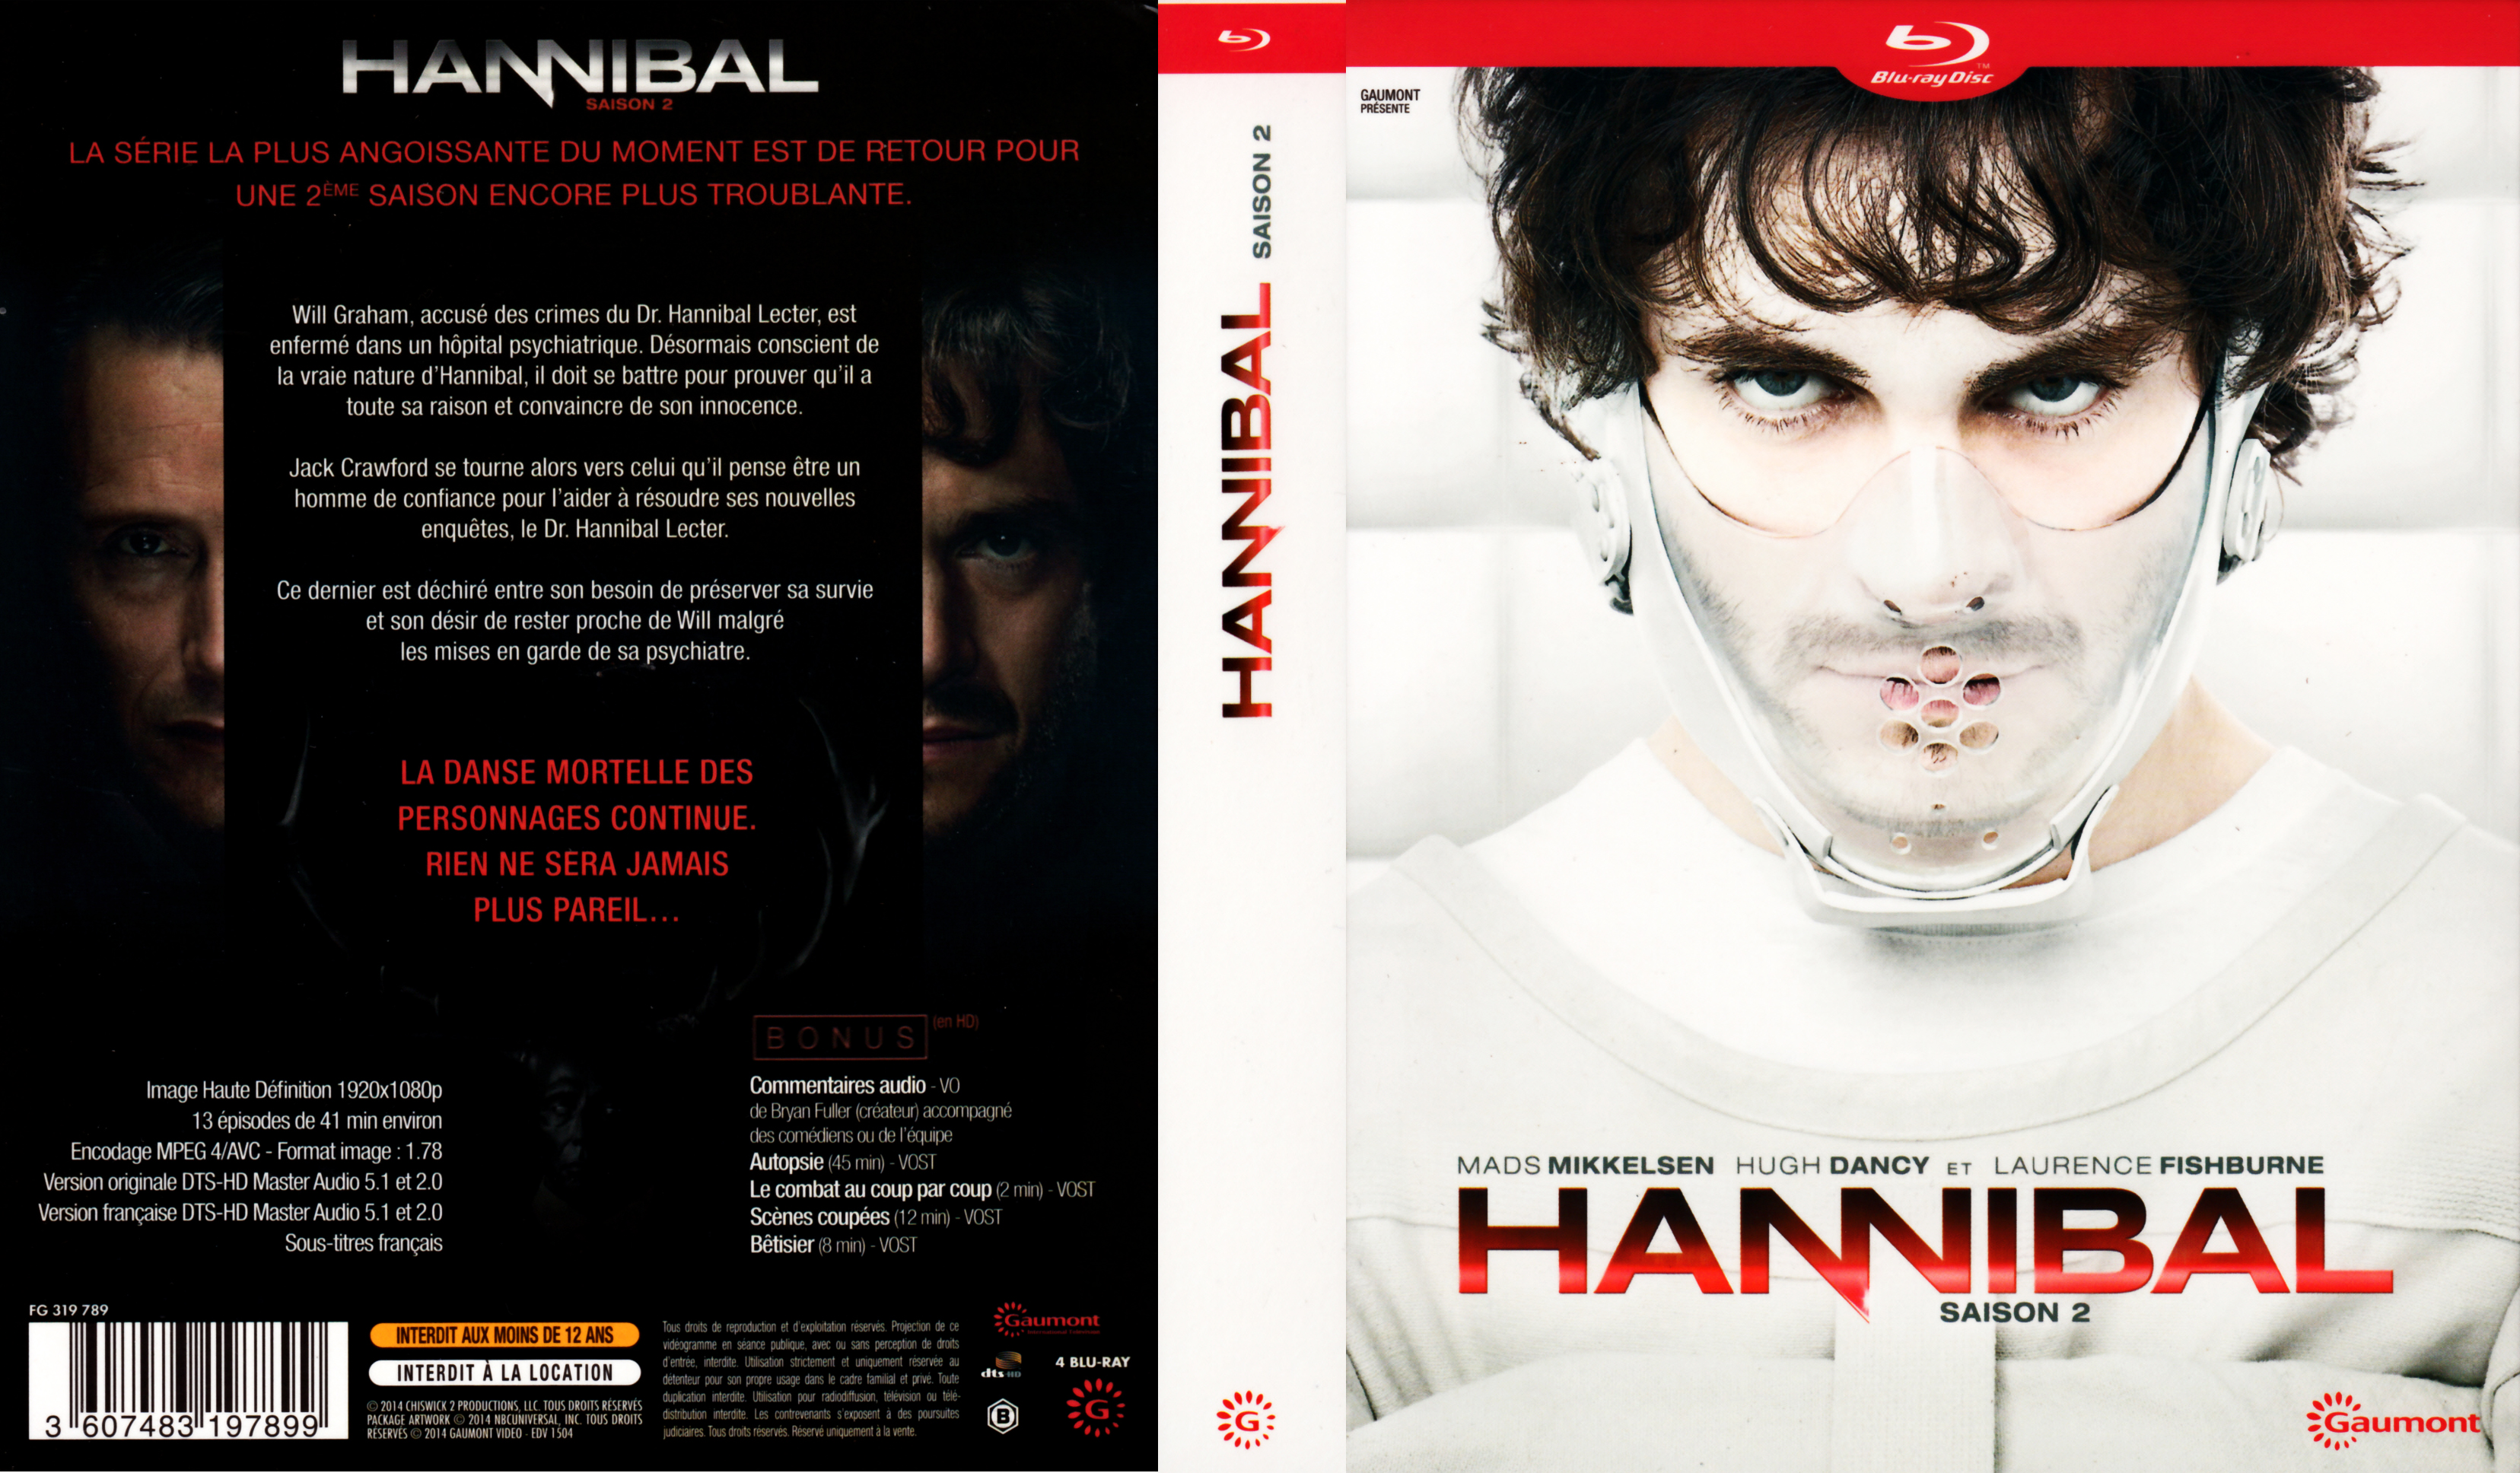 Jaquette DVD Hannibal Saison 2 COFFRET (BLU-RAY)